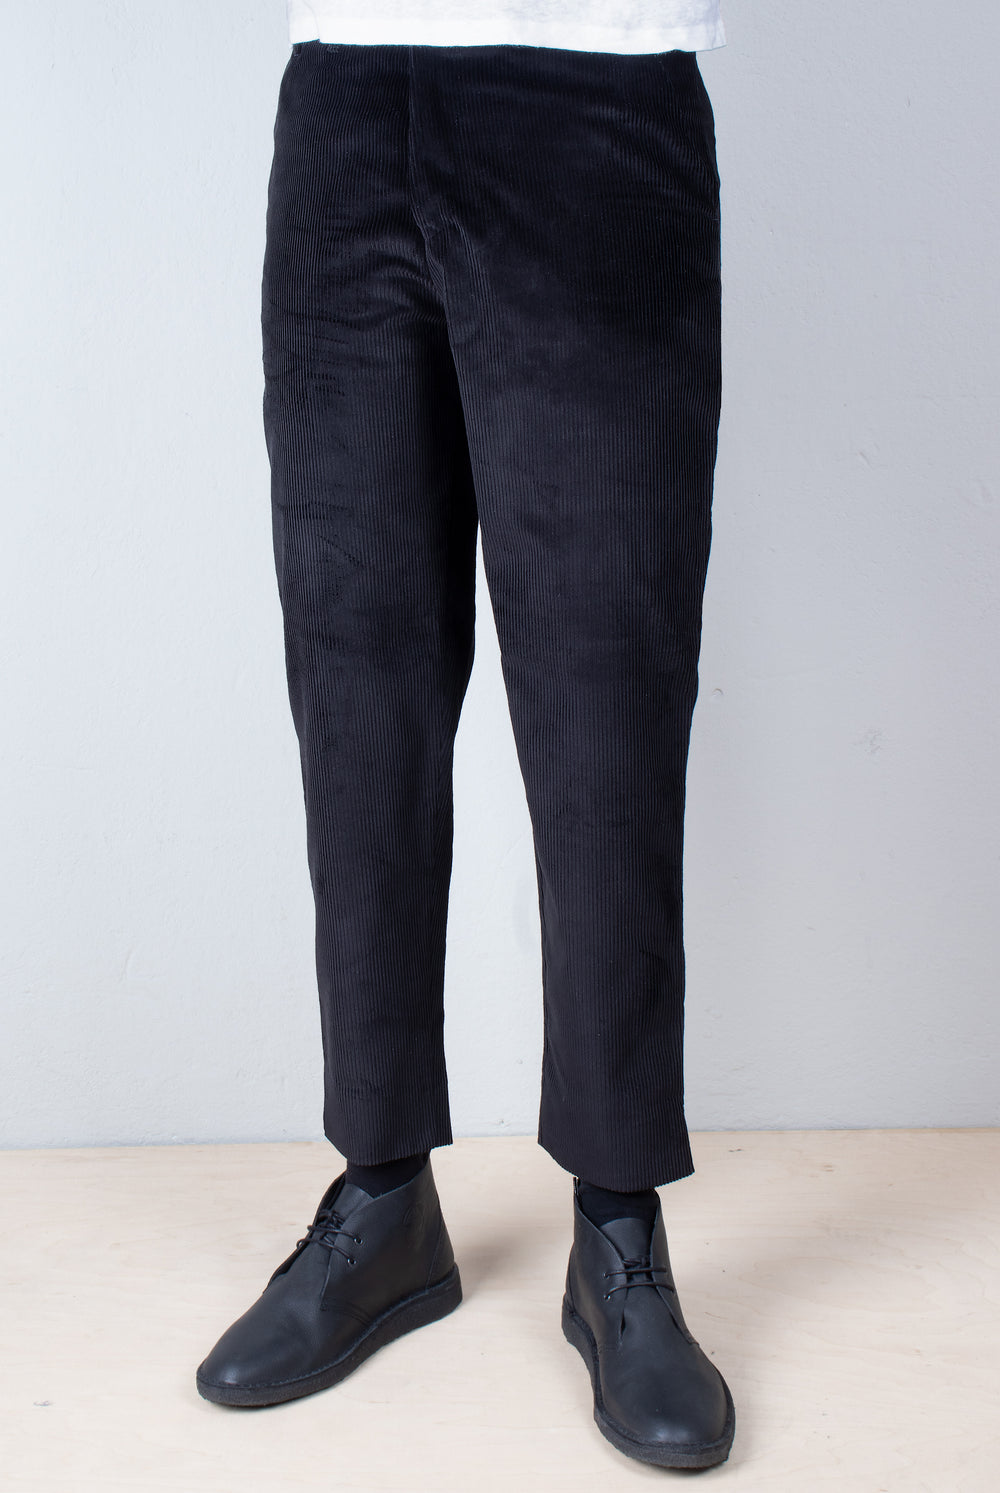     Black Elegant Corduroy tapered trousers ADDeertz Berlin Menswear